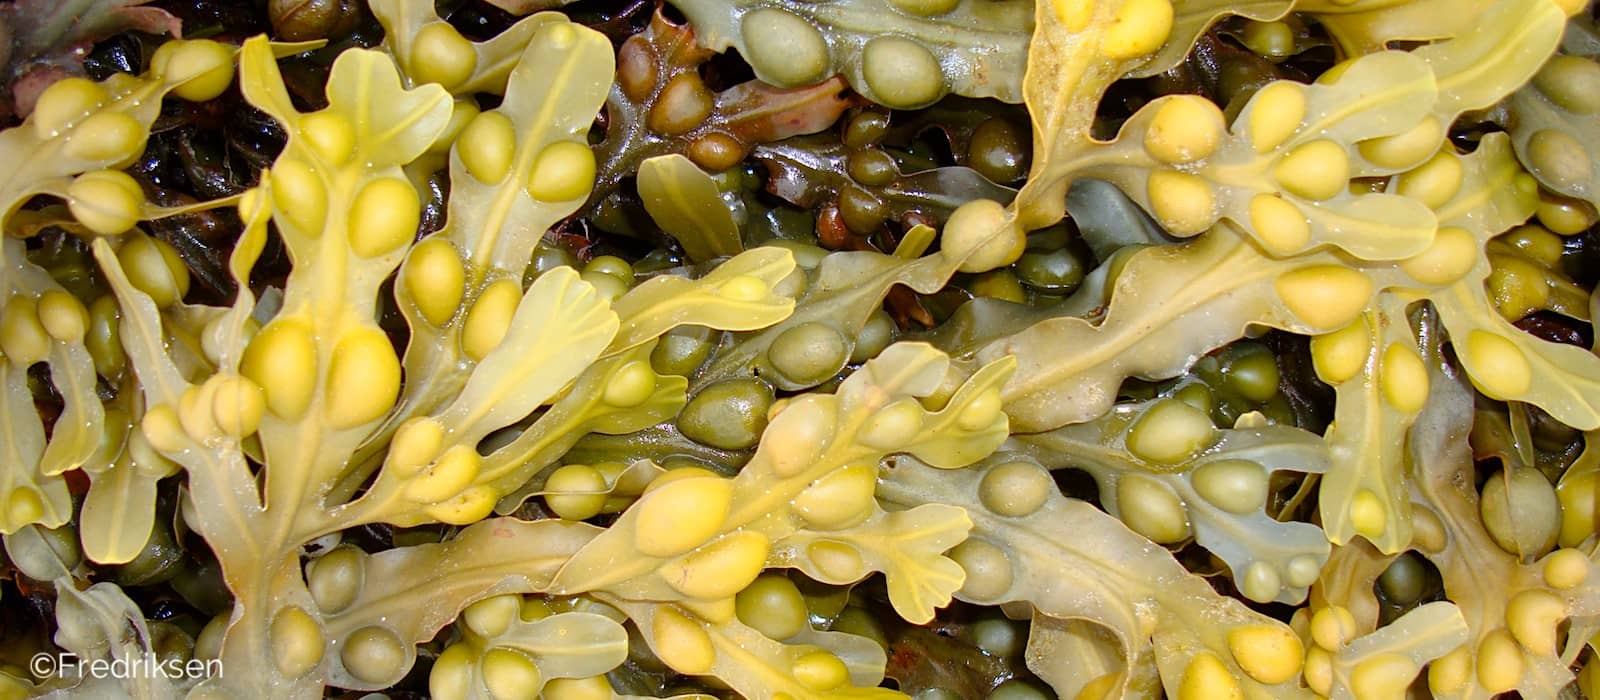 Kelp close-up photo by the University of Bergen